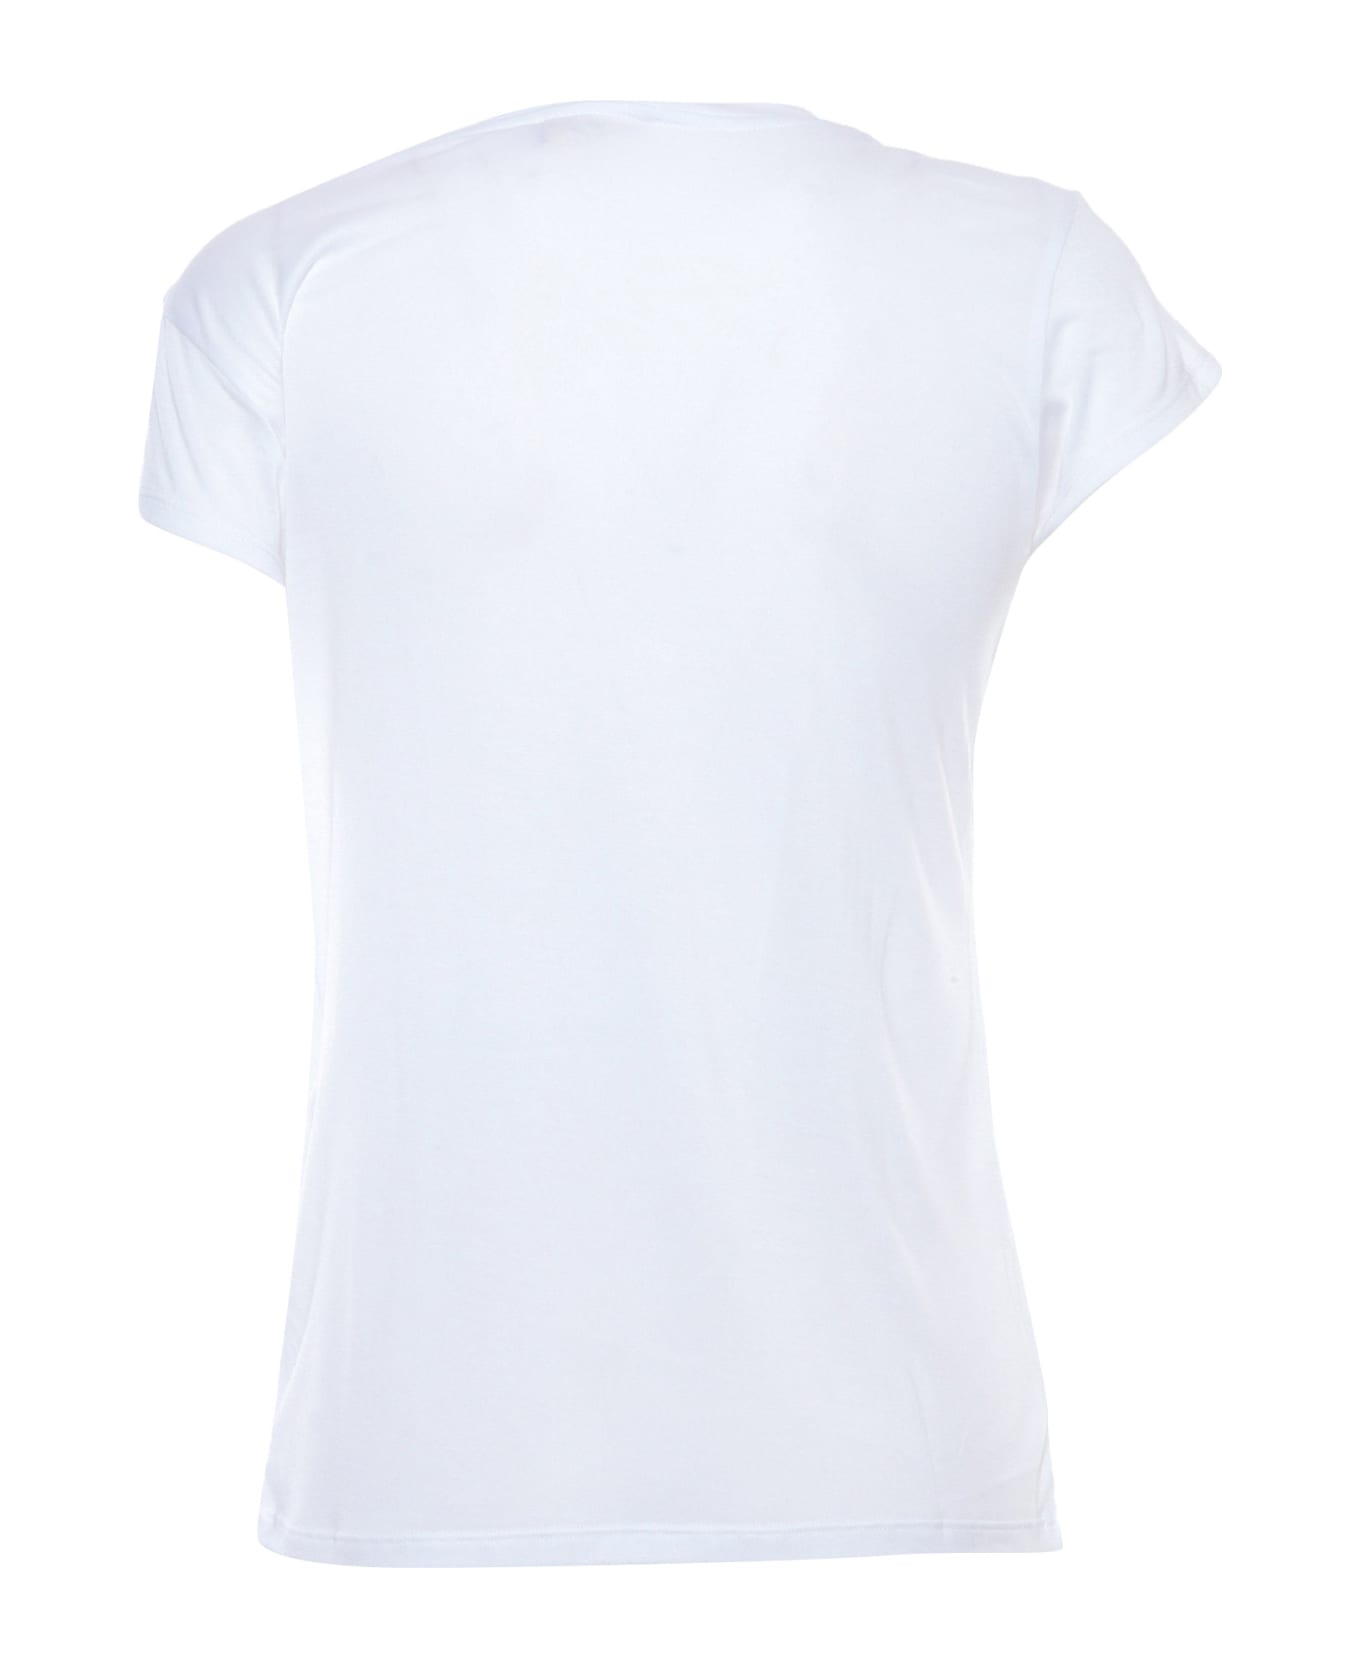 Elisabetta Franchi White T-shirt With Prints - WHITE Tシャツ